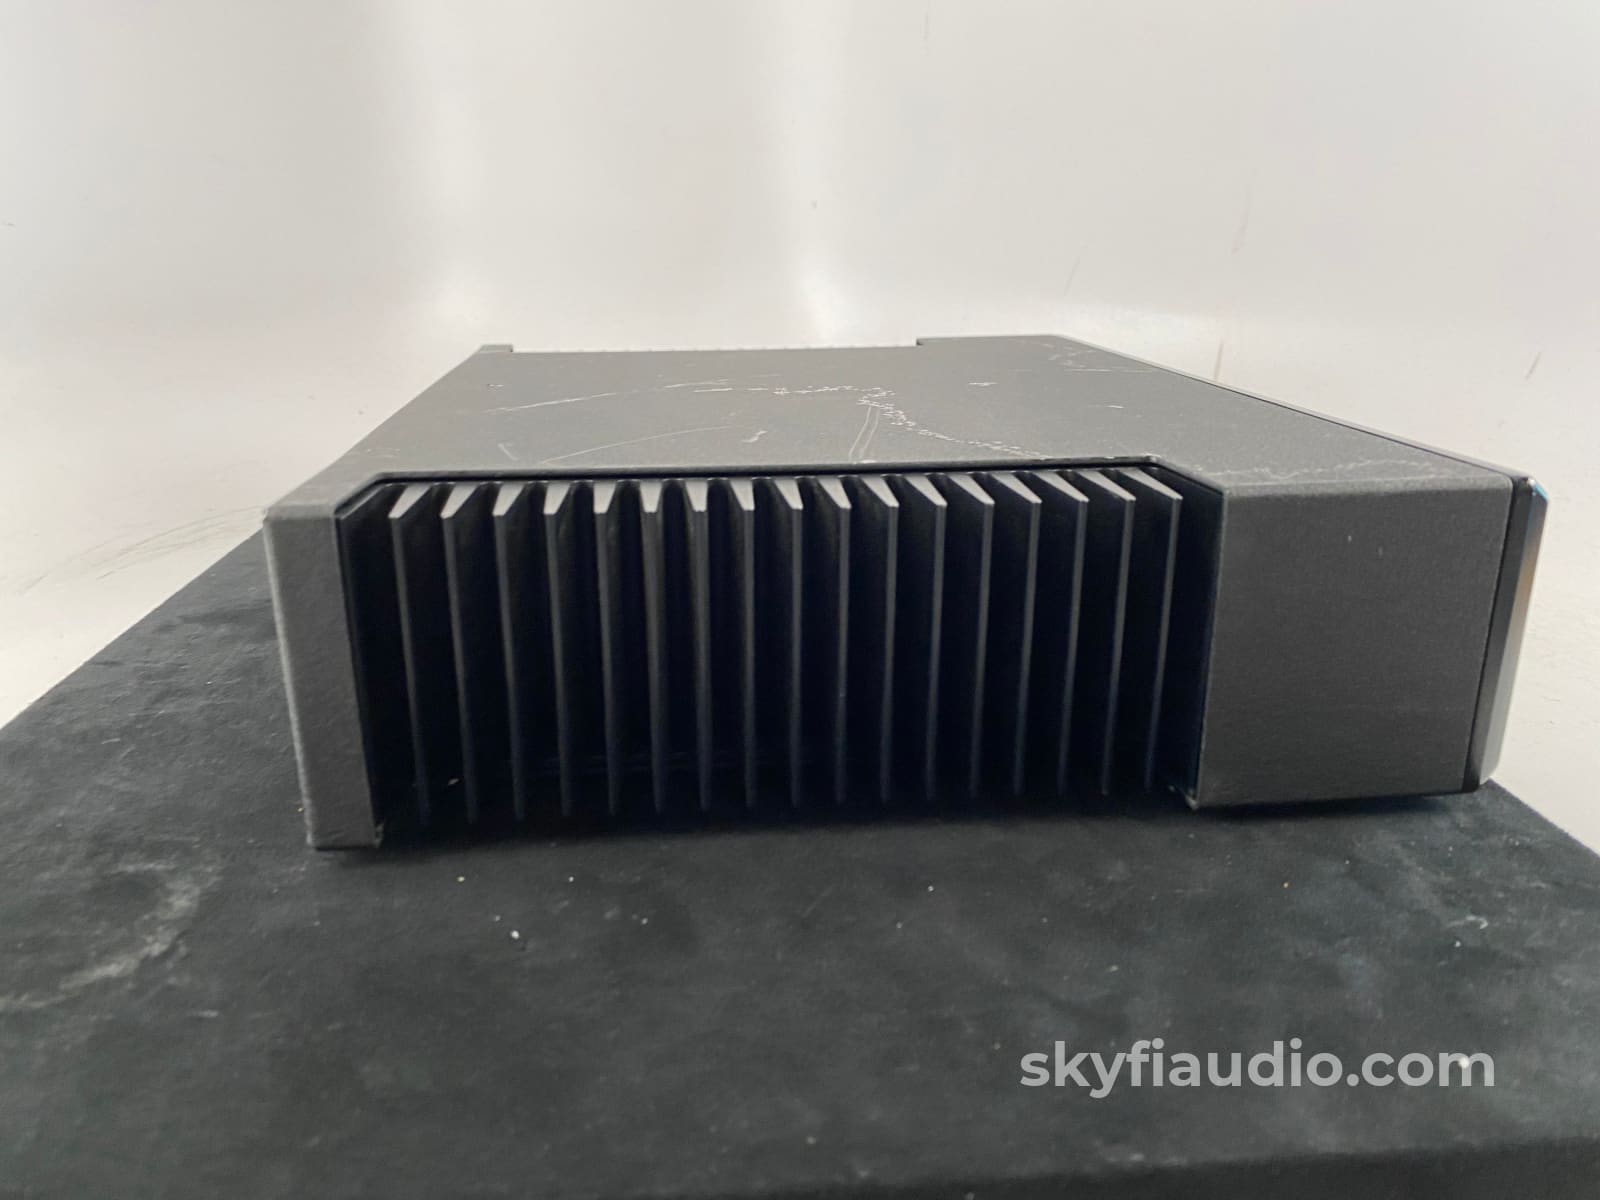 Linn Lk280 Stereo Power Amplifier - Dual Mono Construction